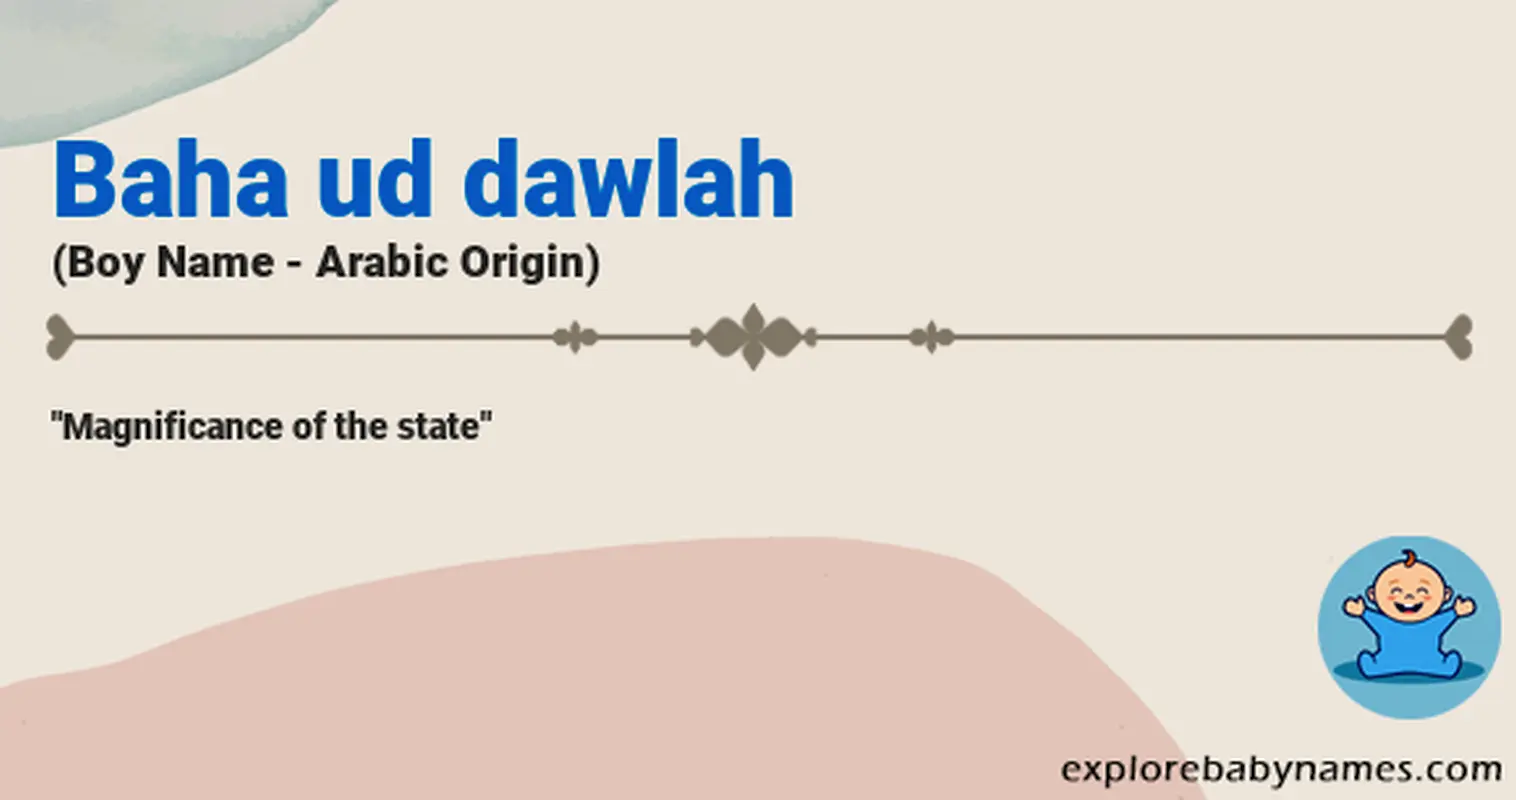 Meaning of Baha ud dawlah